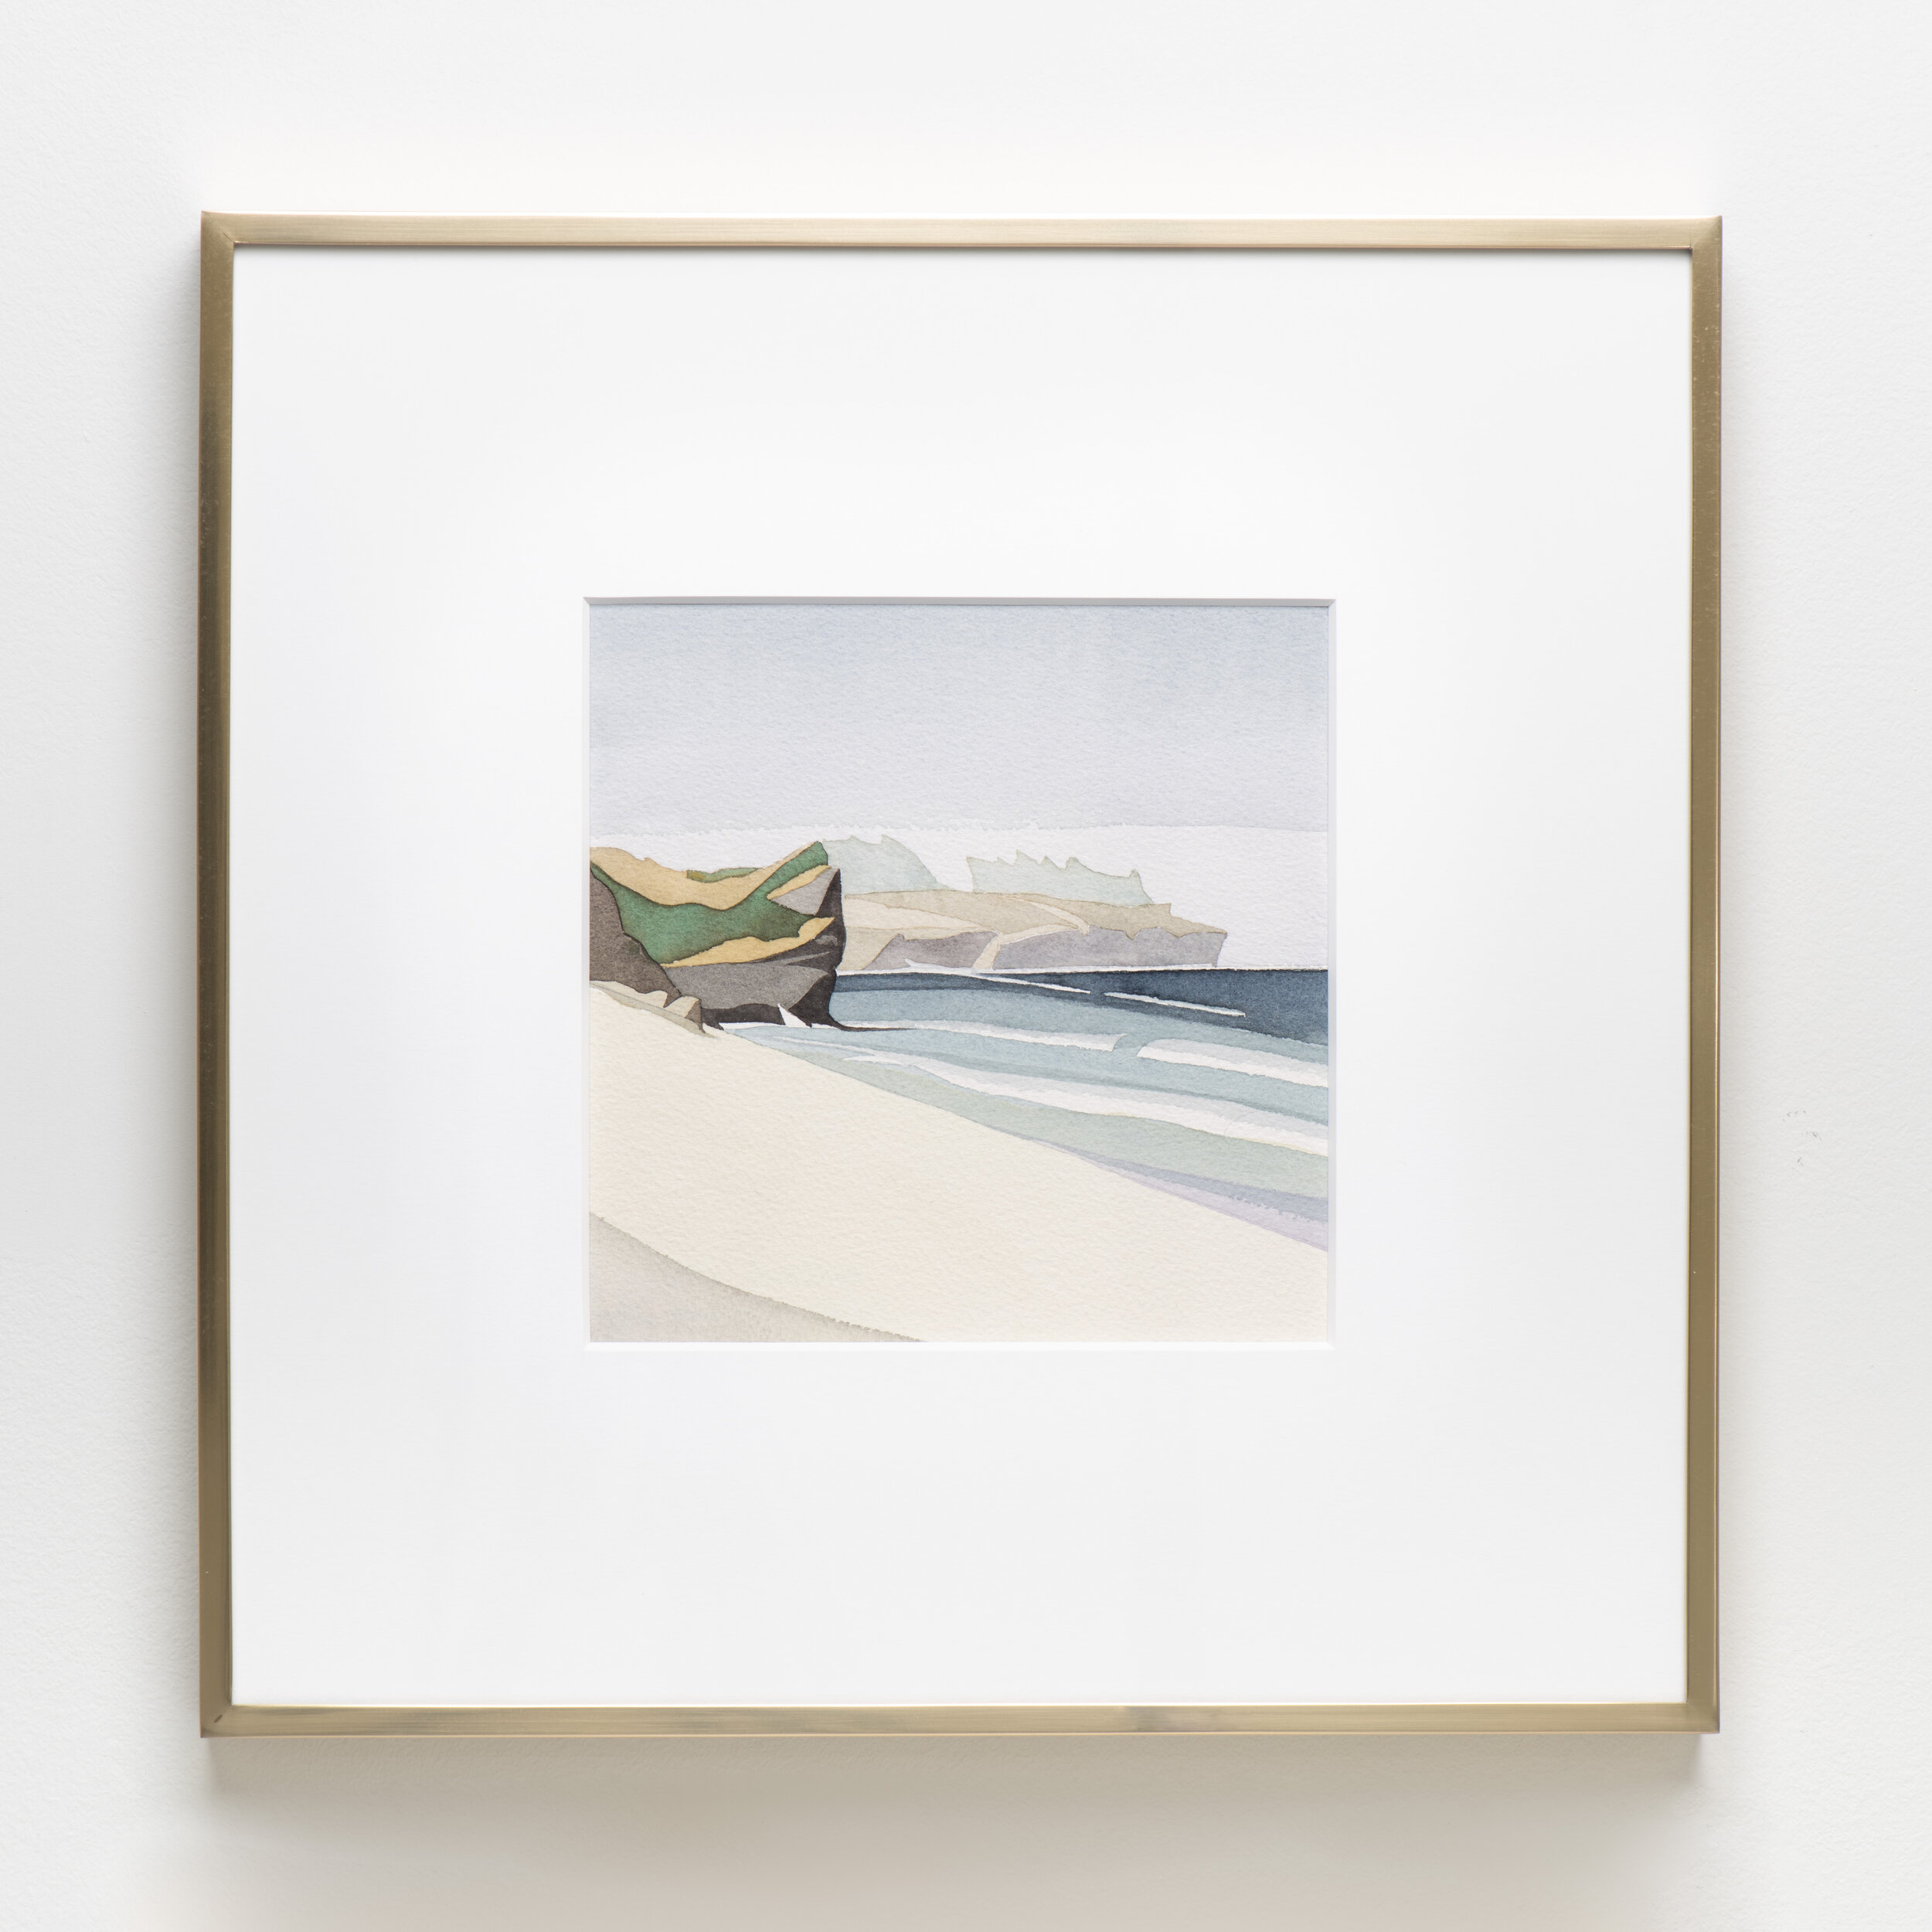   Kilifi Beach, Kenya , 2018 Watercolor on paper 16 1/4 x 16 1/4 x 1 1/4 inches (framed) 